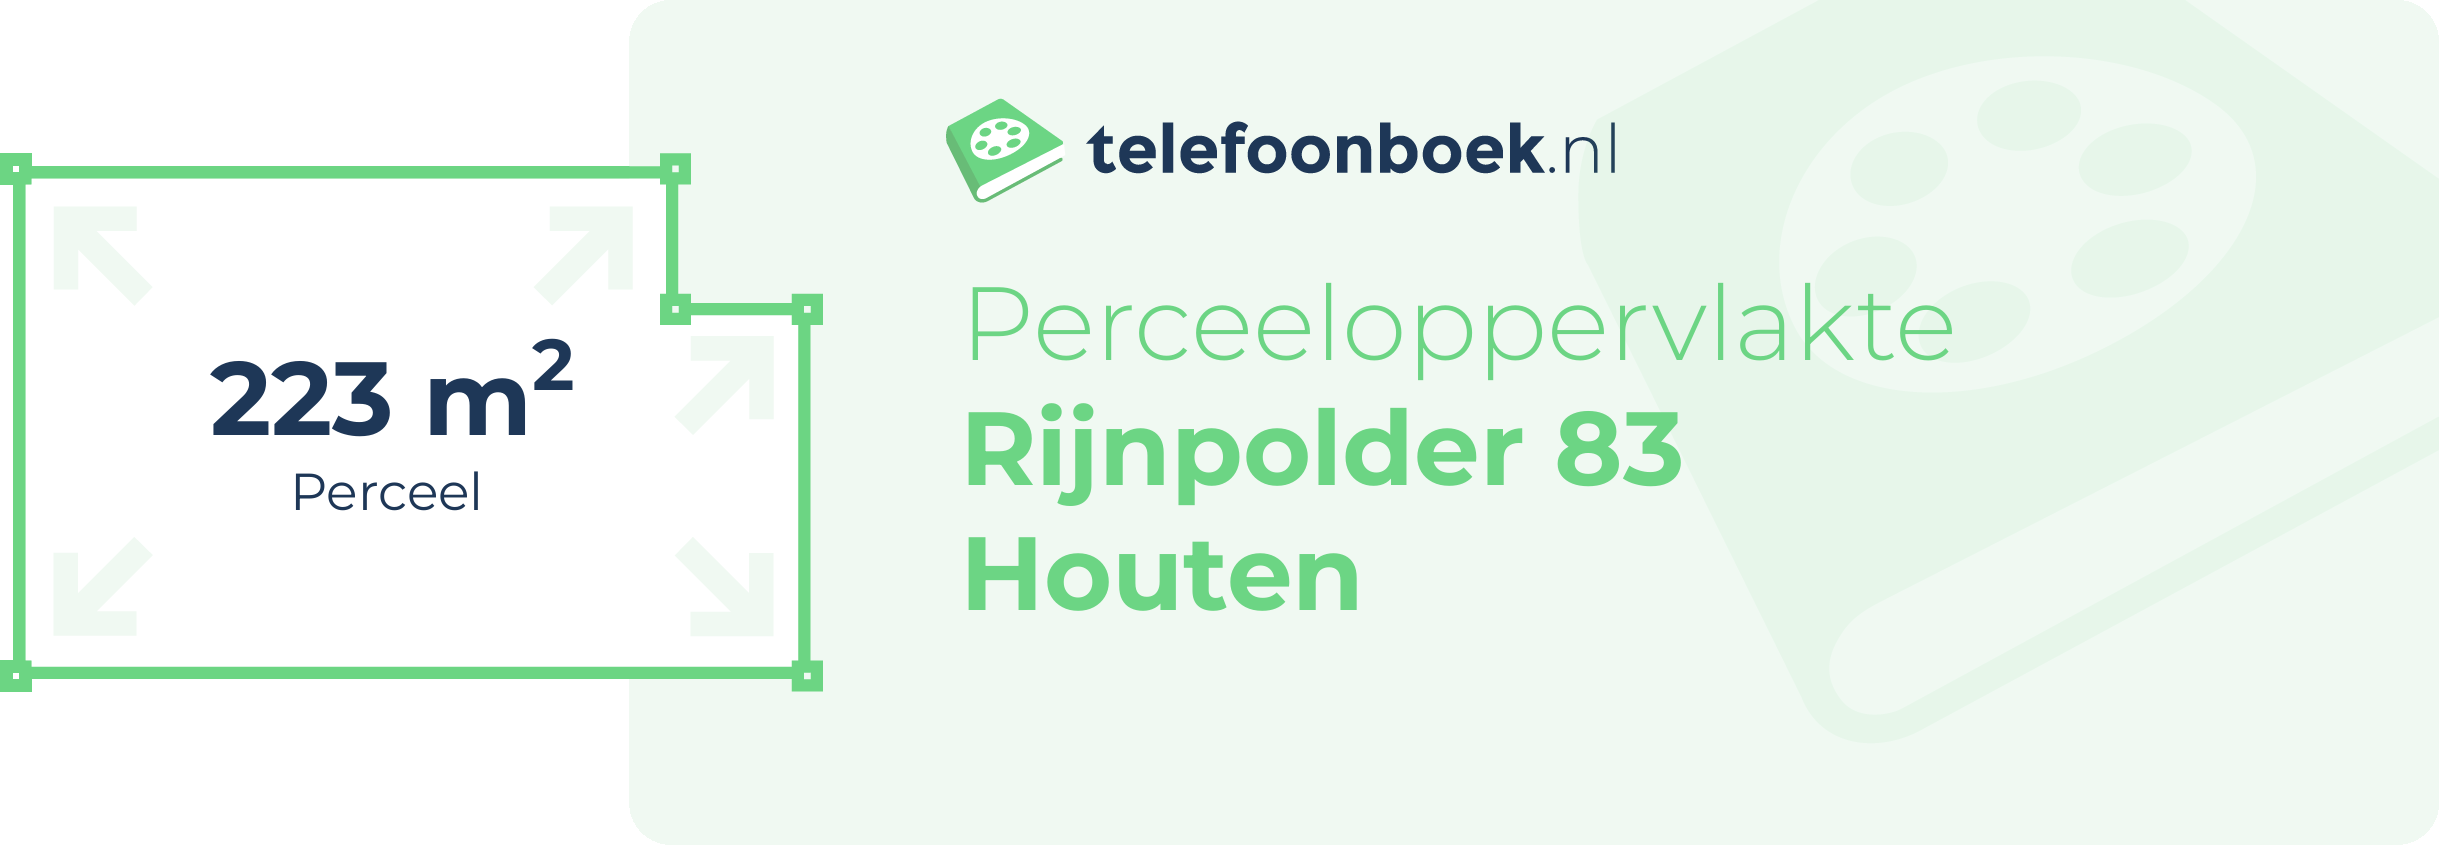 Perceeloppervlakte Rijnpolder 83 Houten